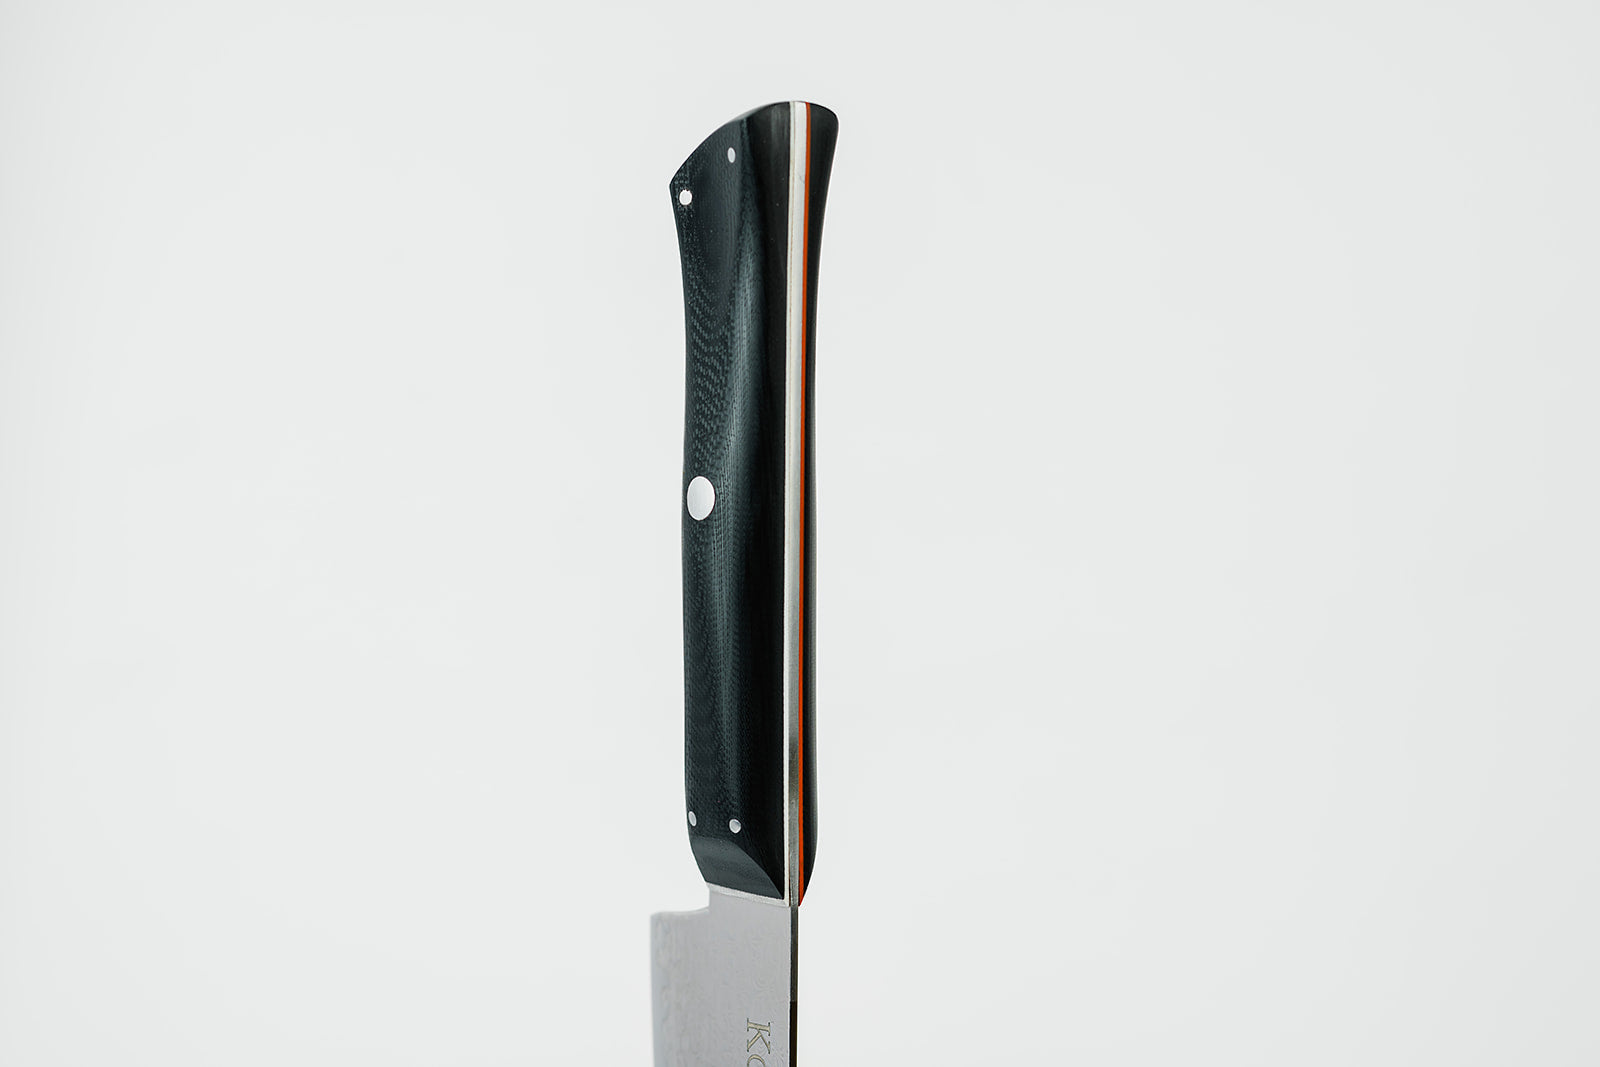 Paring Knife | "Mini Chefs" | Ninja Collection - Koi Knives